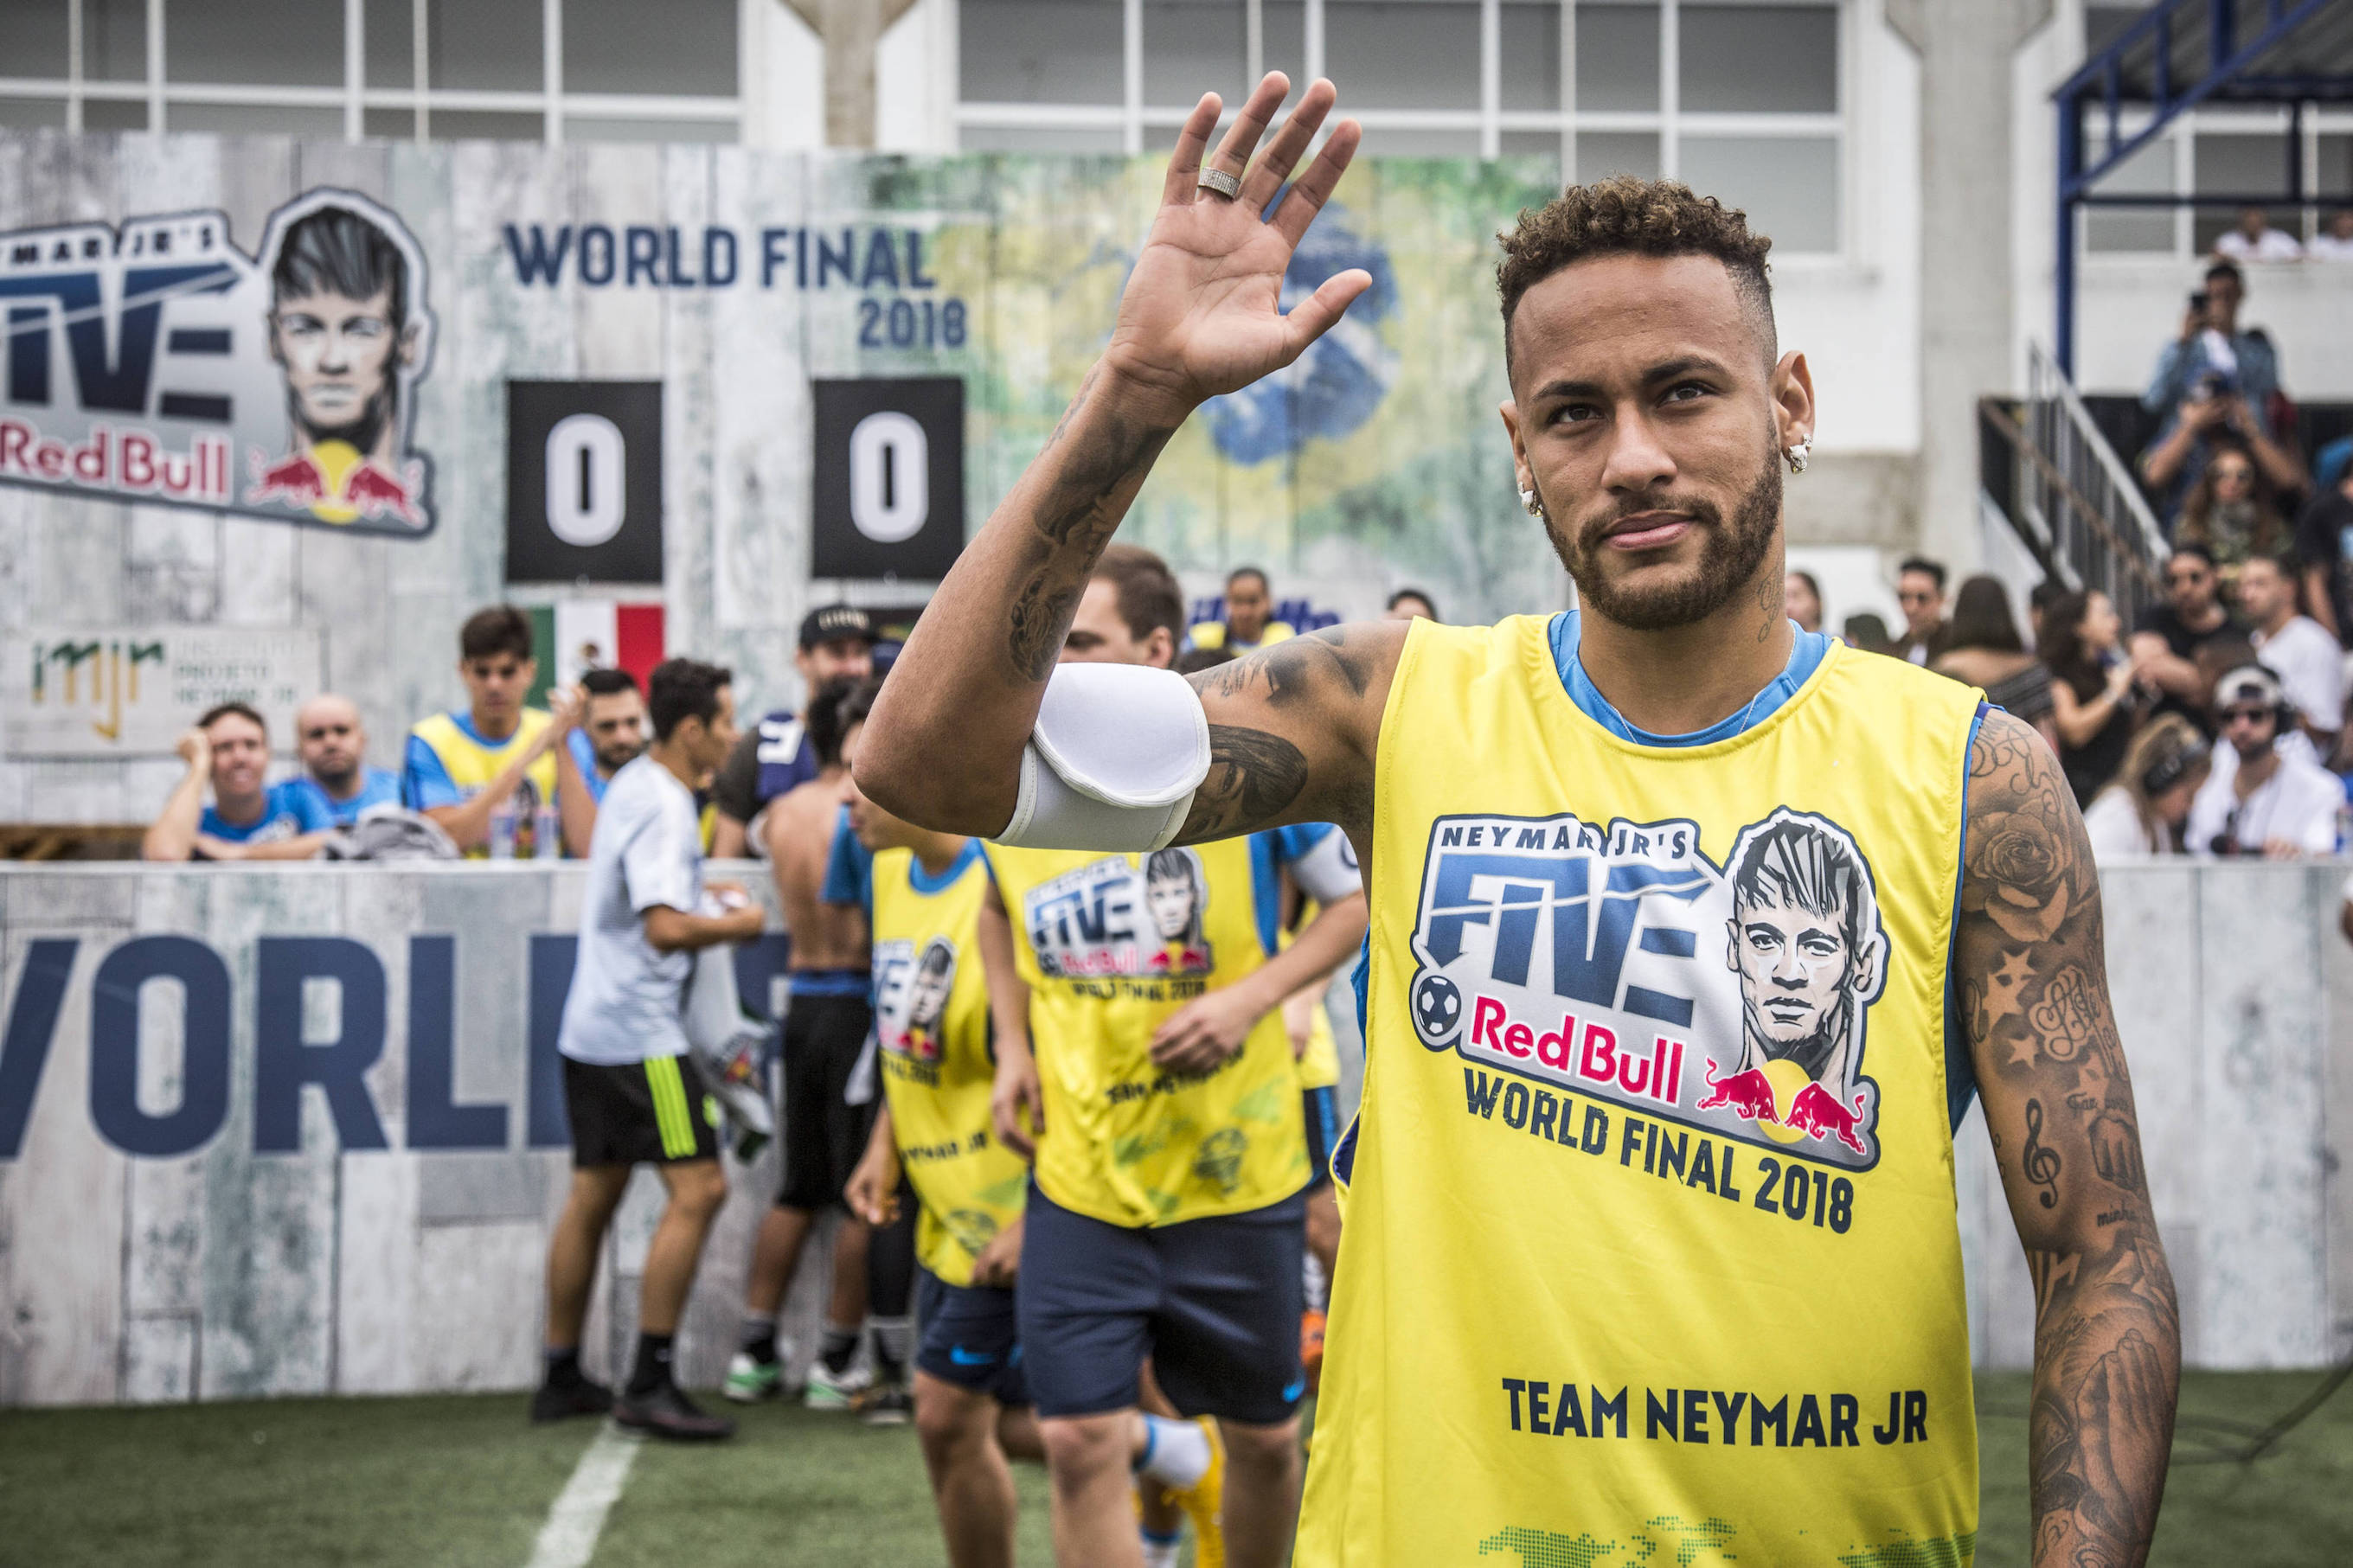         Red Bull Neymar Jr's Five